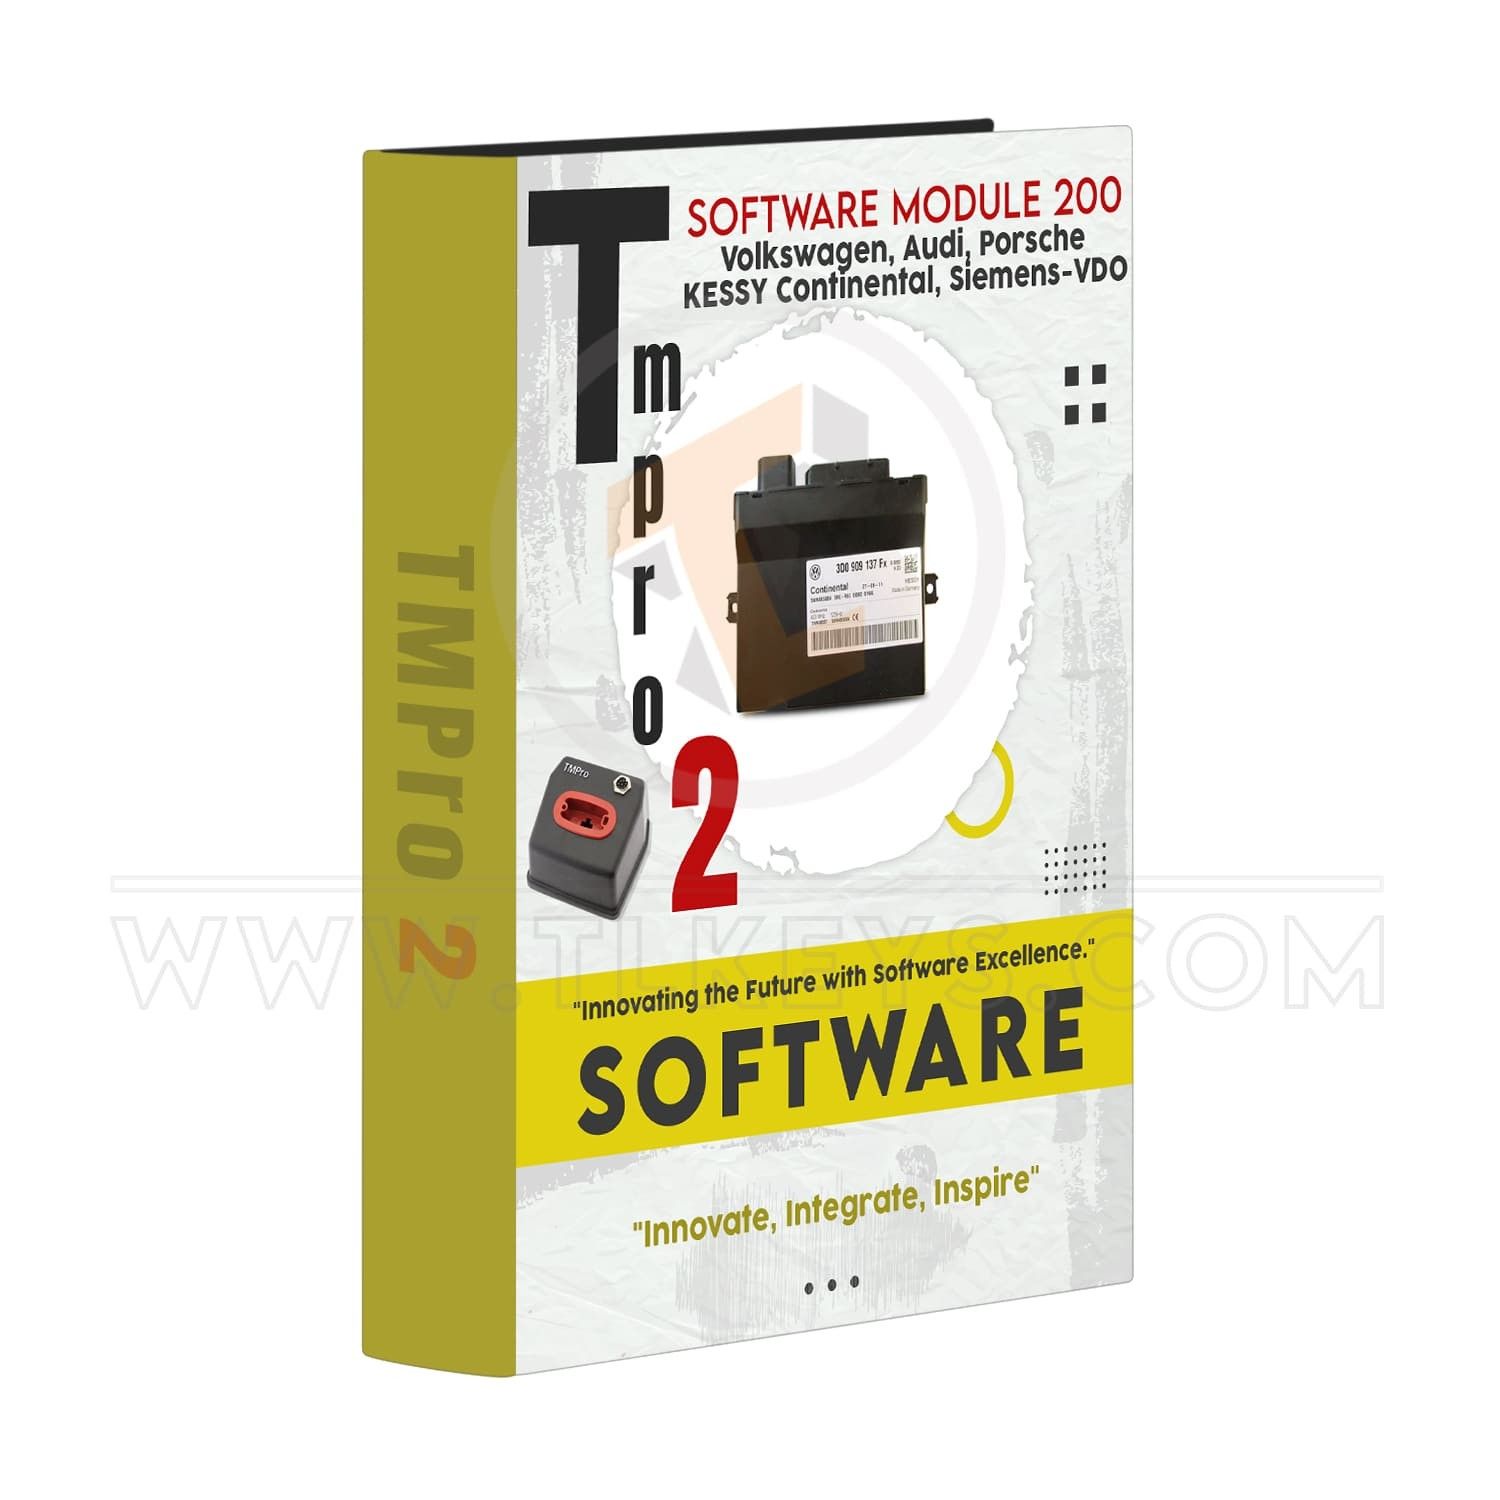 Tmpro 2 Tmpro 2 Software module 200 – Volkswagen, Audi, Porsche KE software